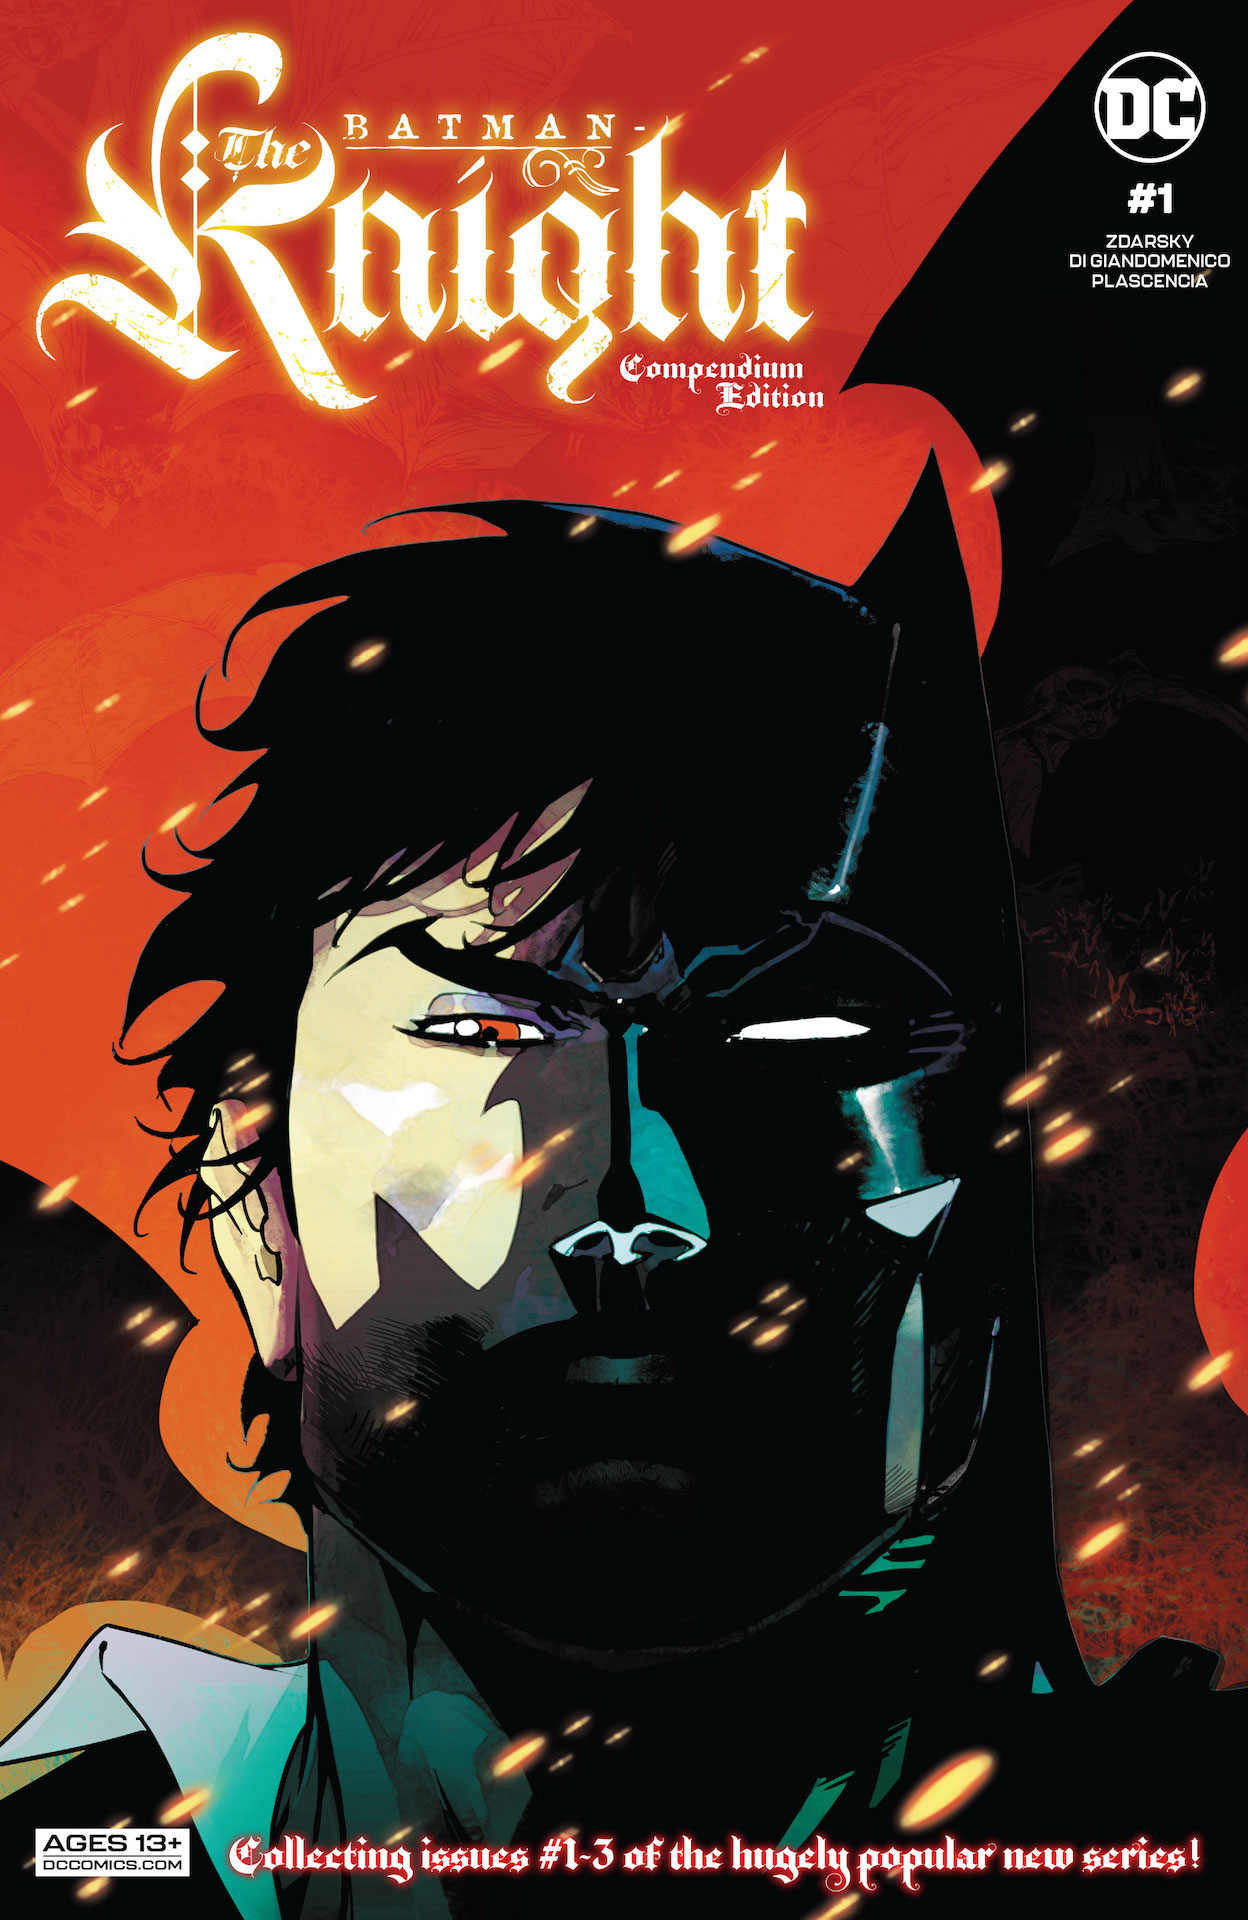 DC Preview: Batman: The Knight Compendium Edition #1